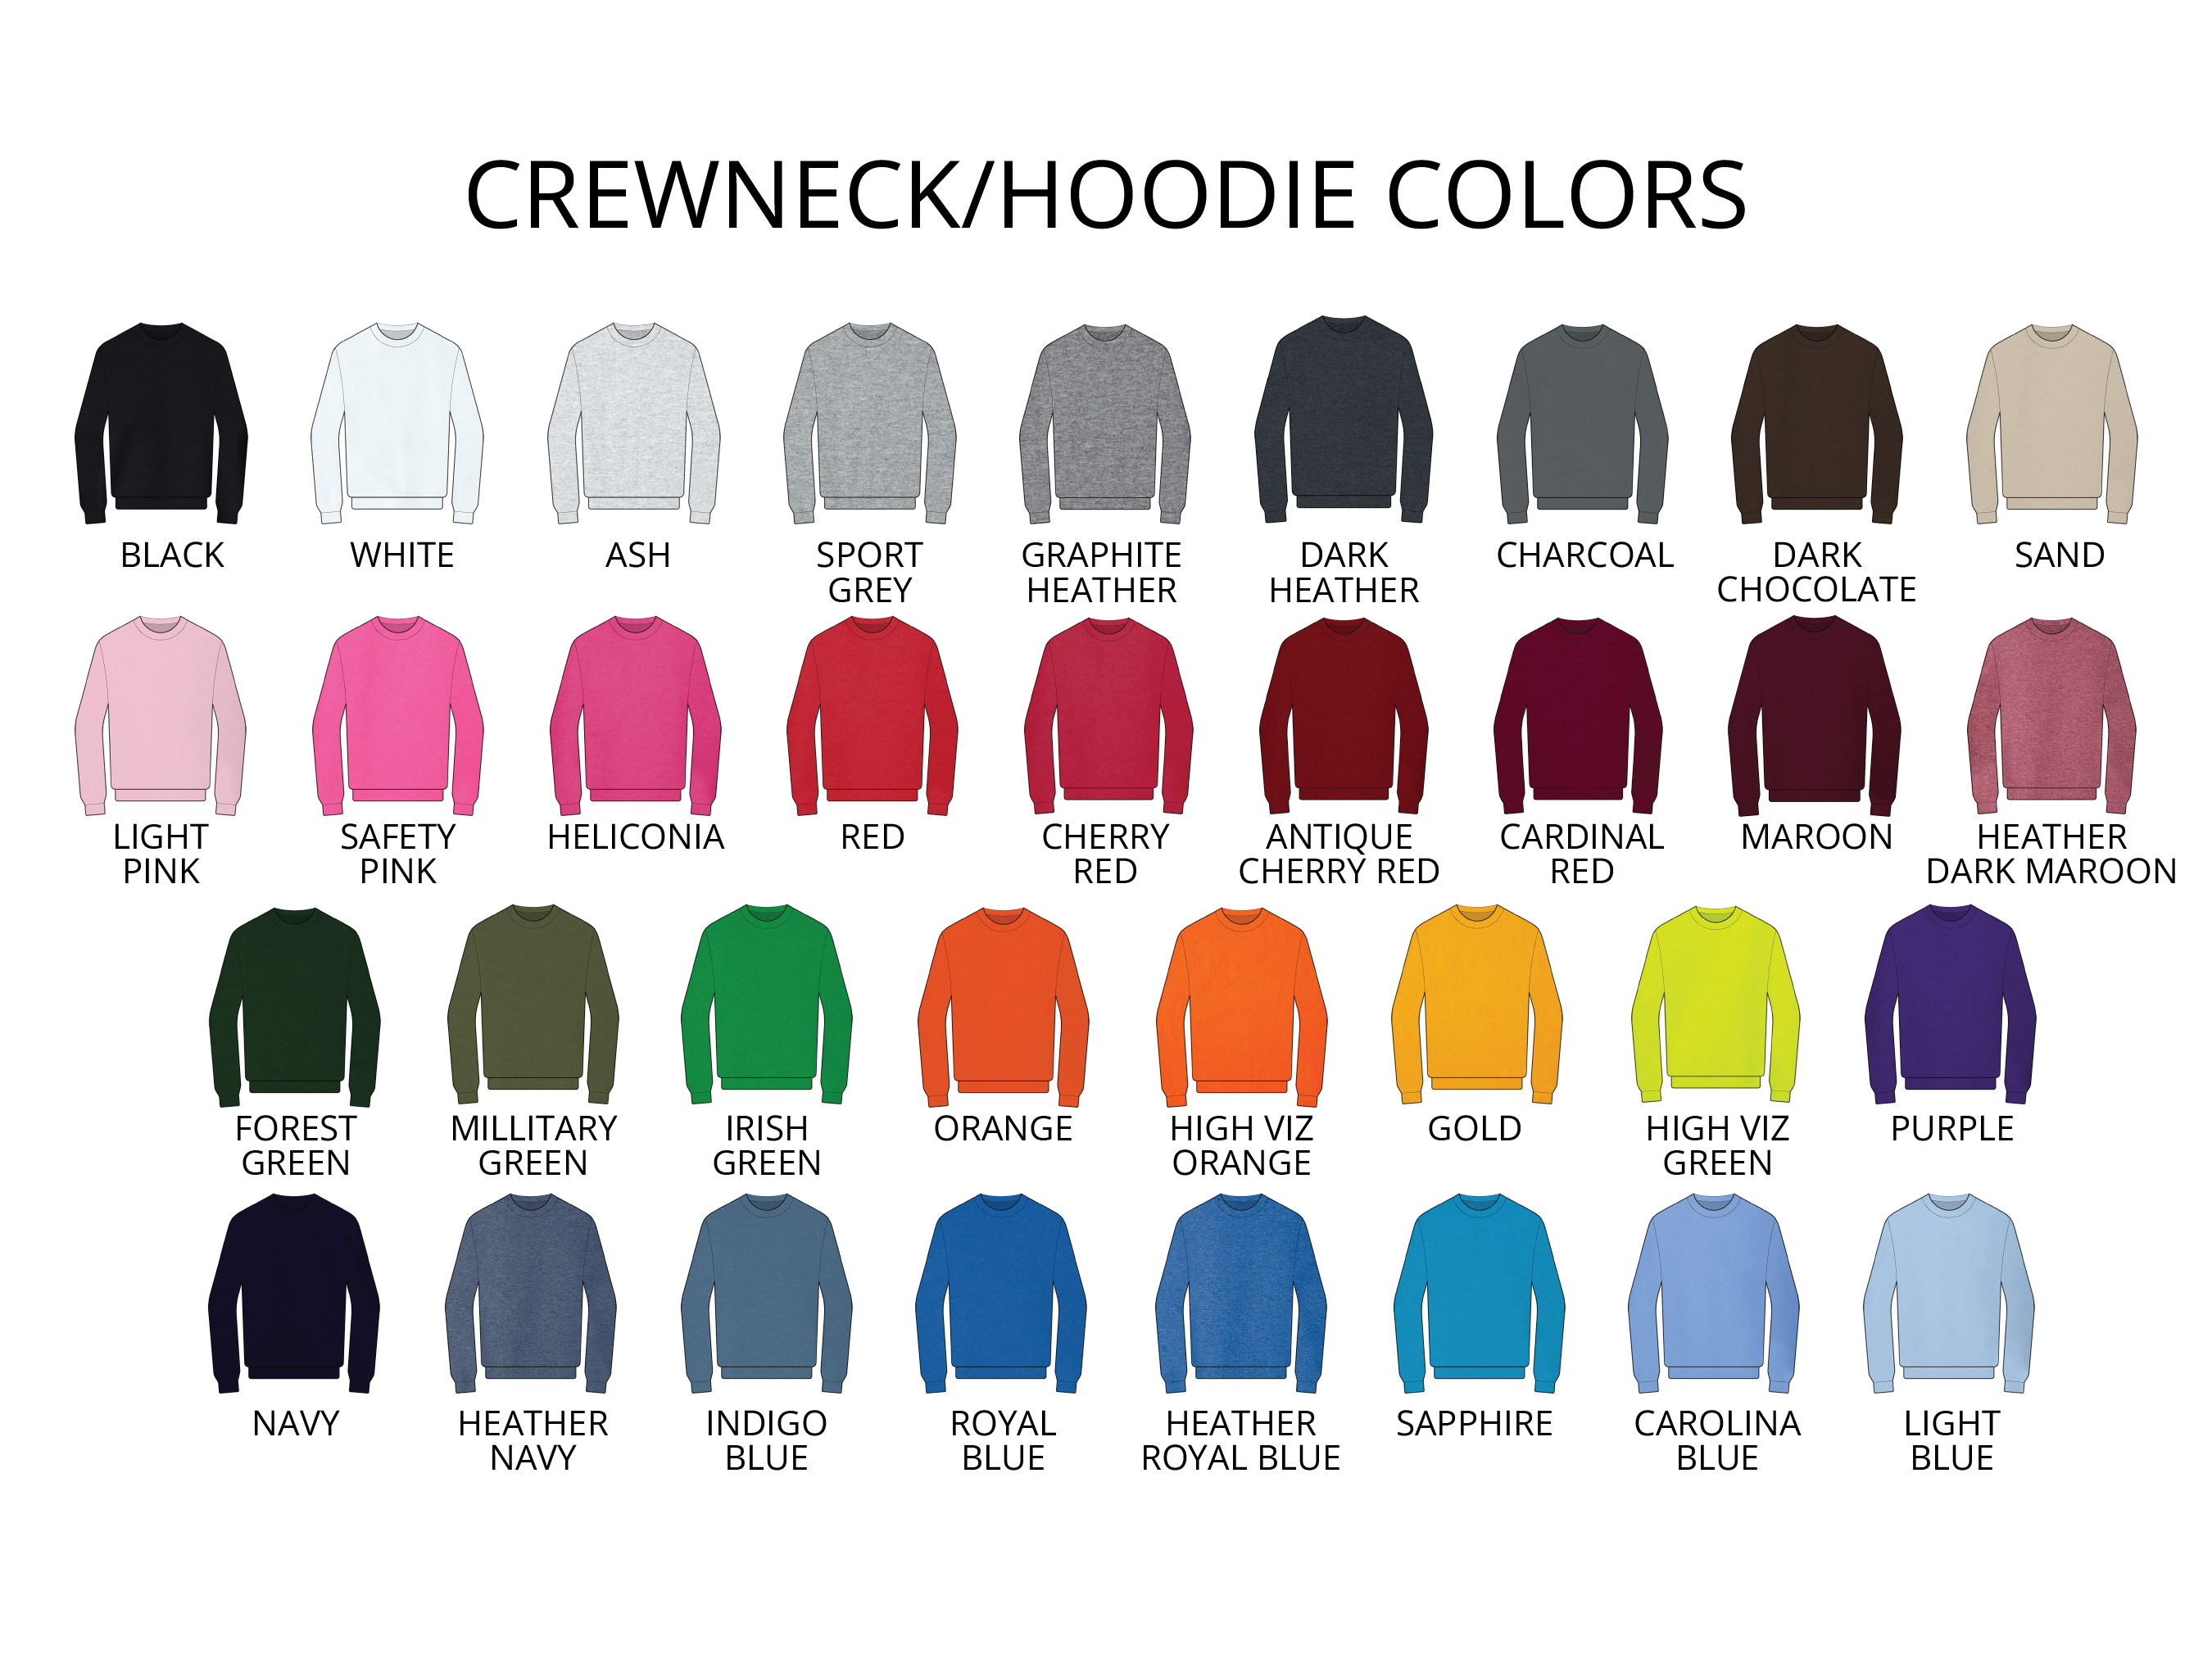 Monogrammed 'Flower Market' Crewneck Sweatshirt